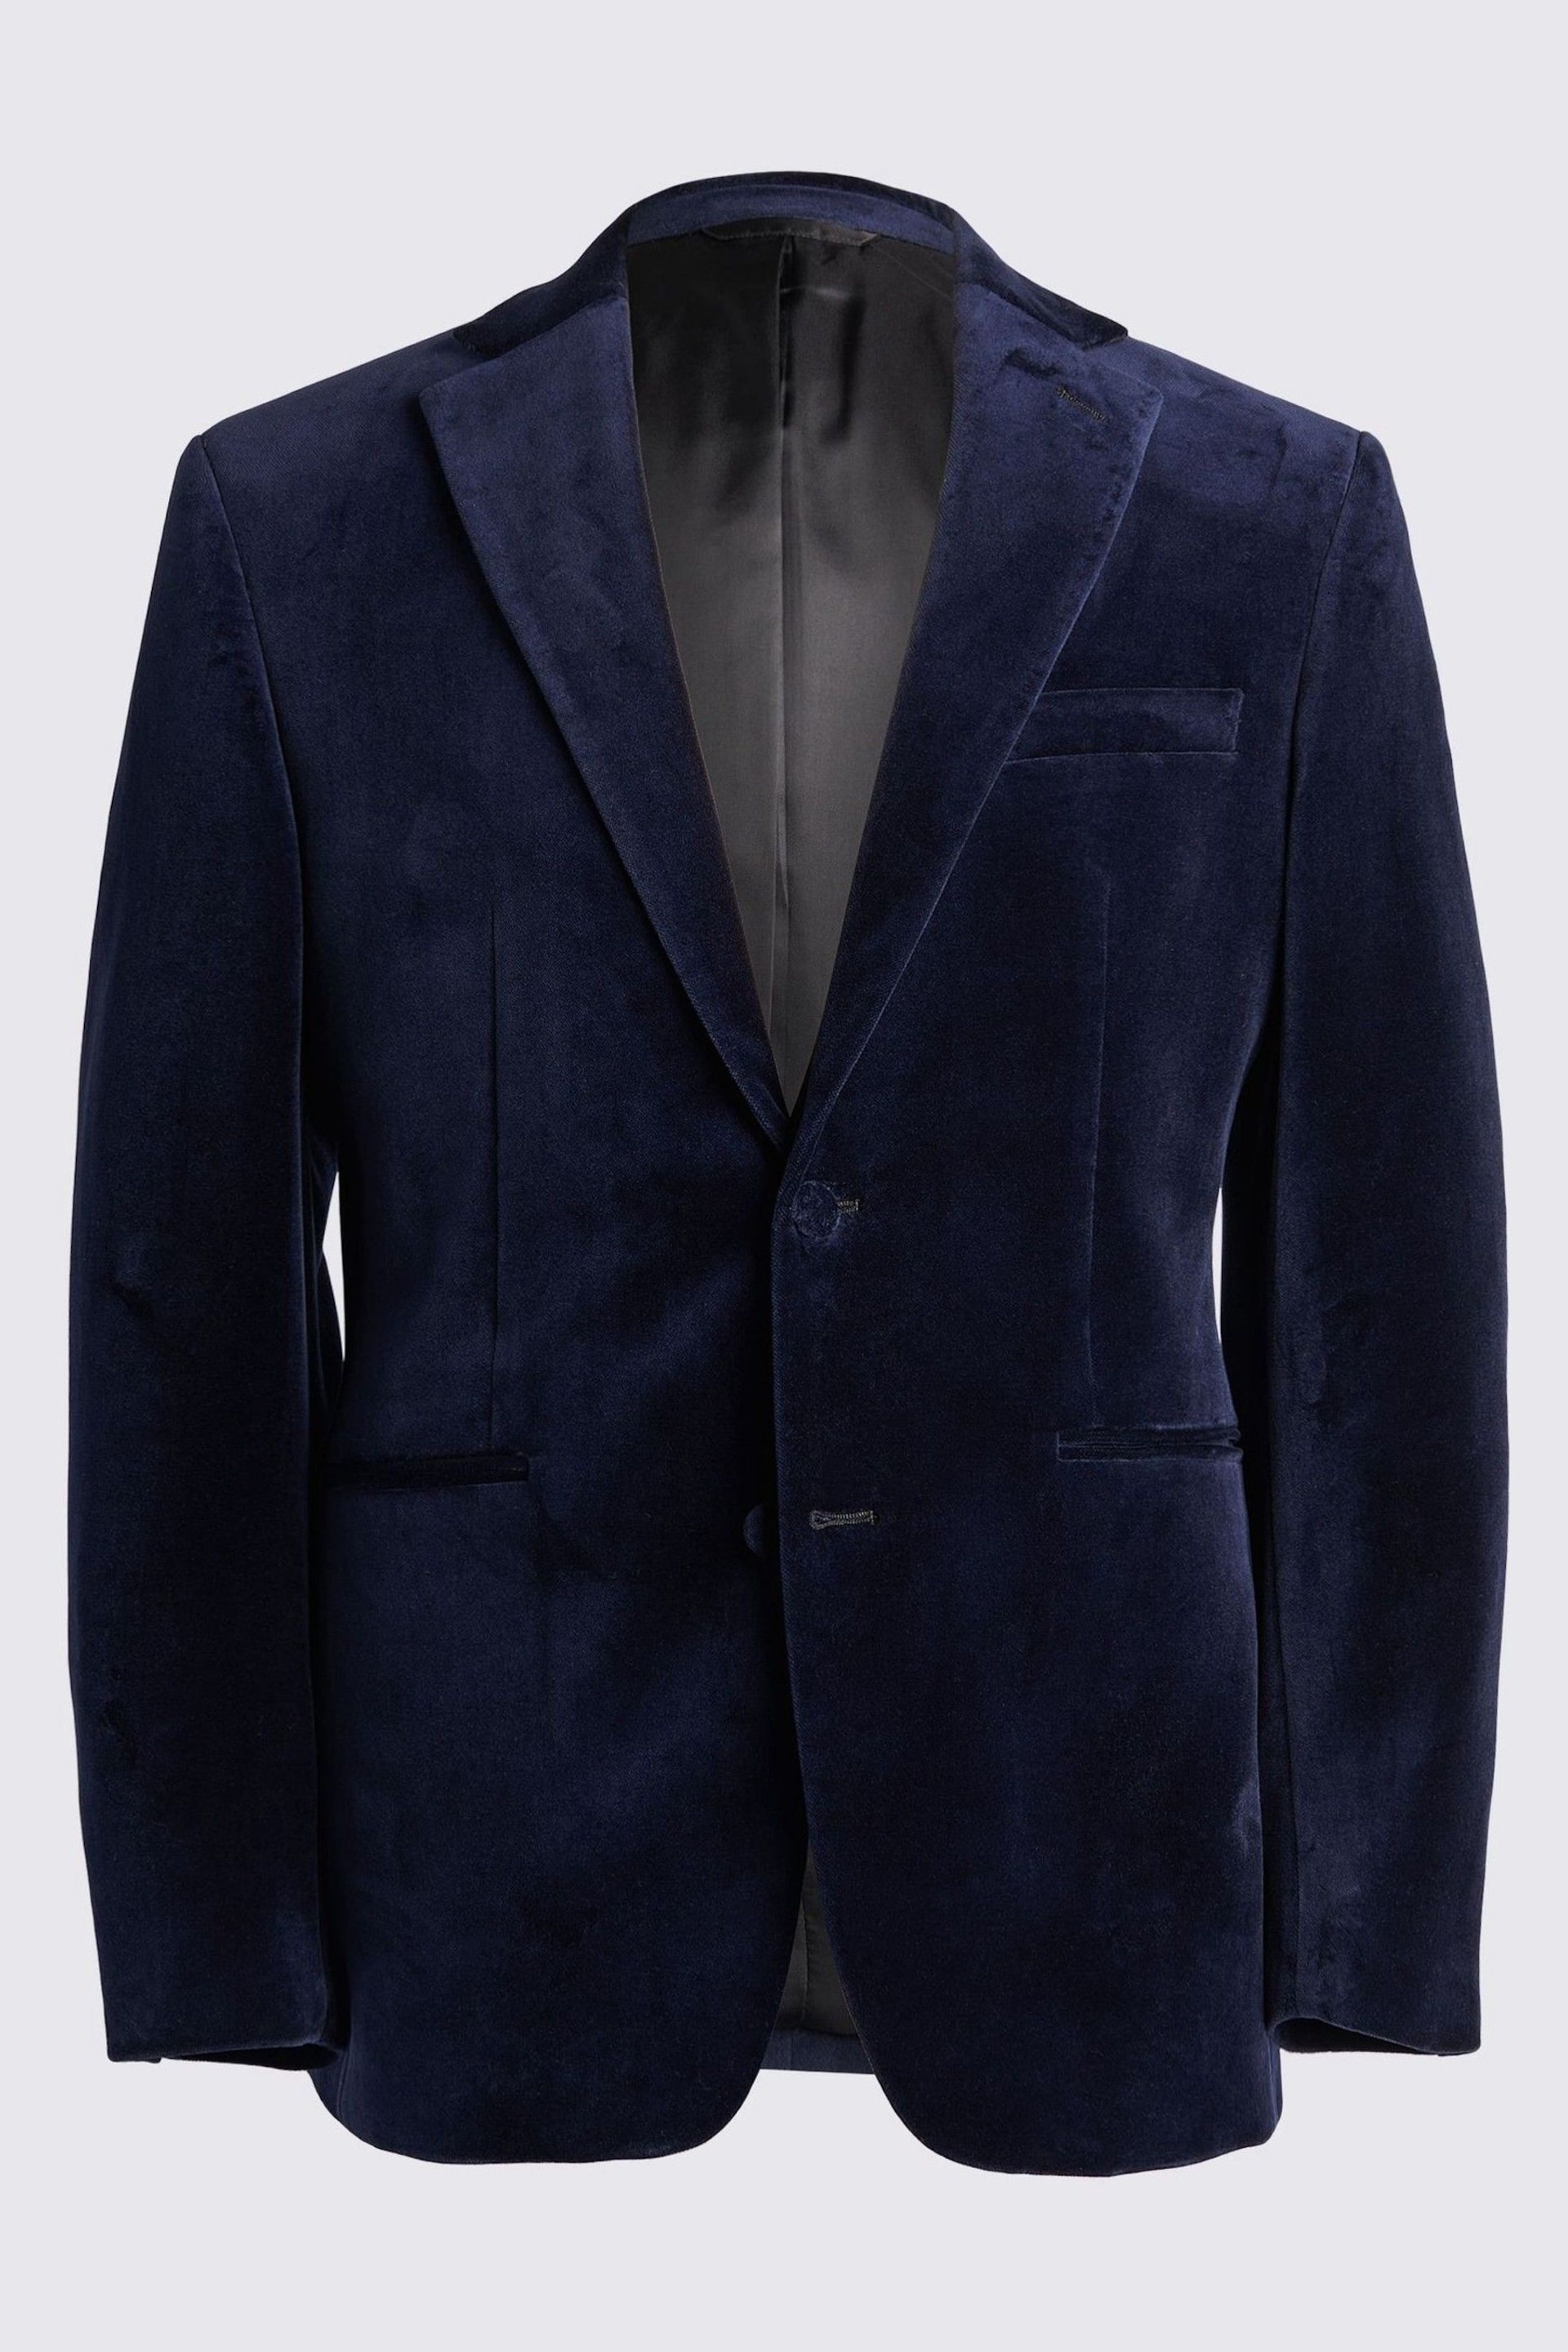 MOSS Tailored Fit Blue Velvet Jacket - Image 5 of 5